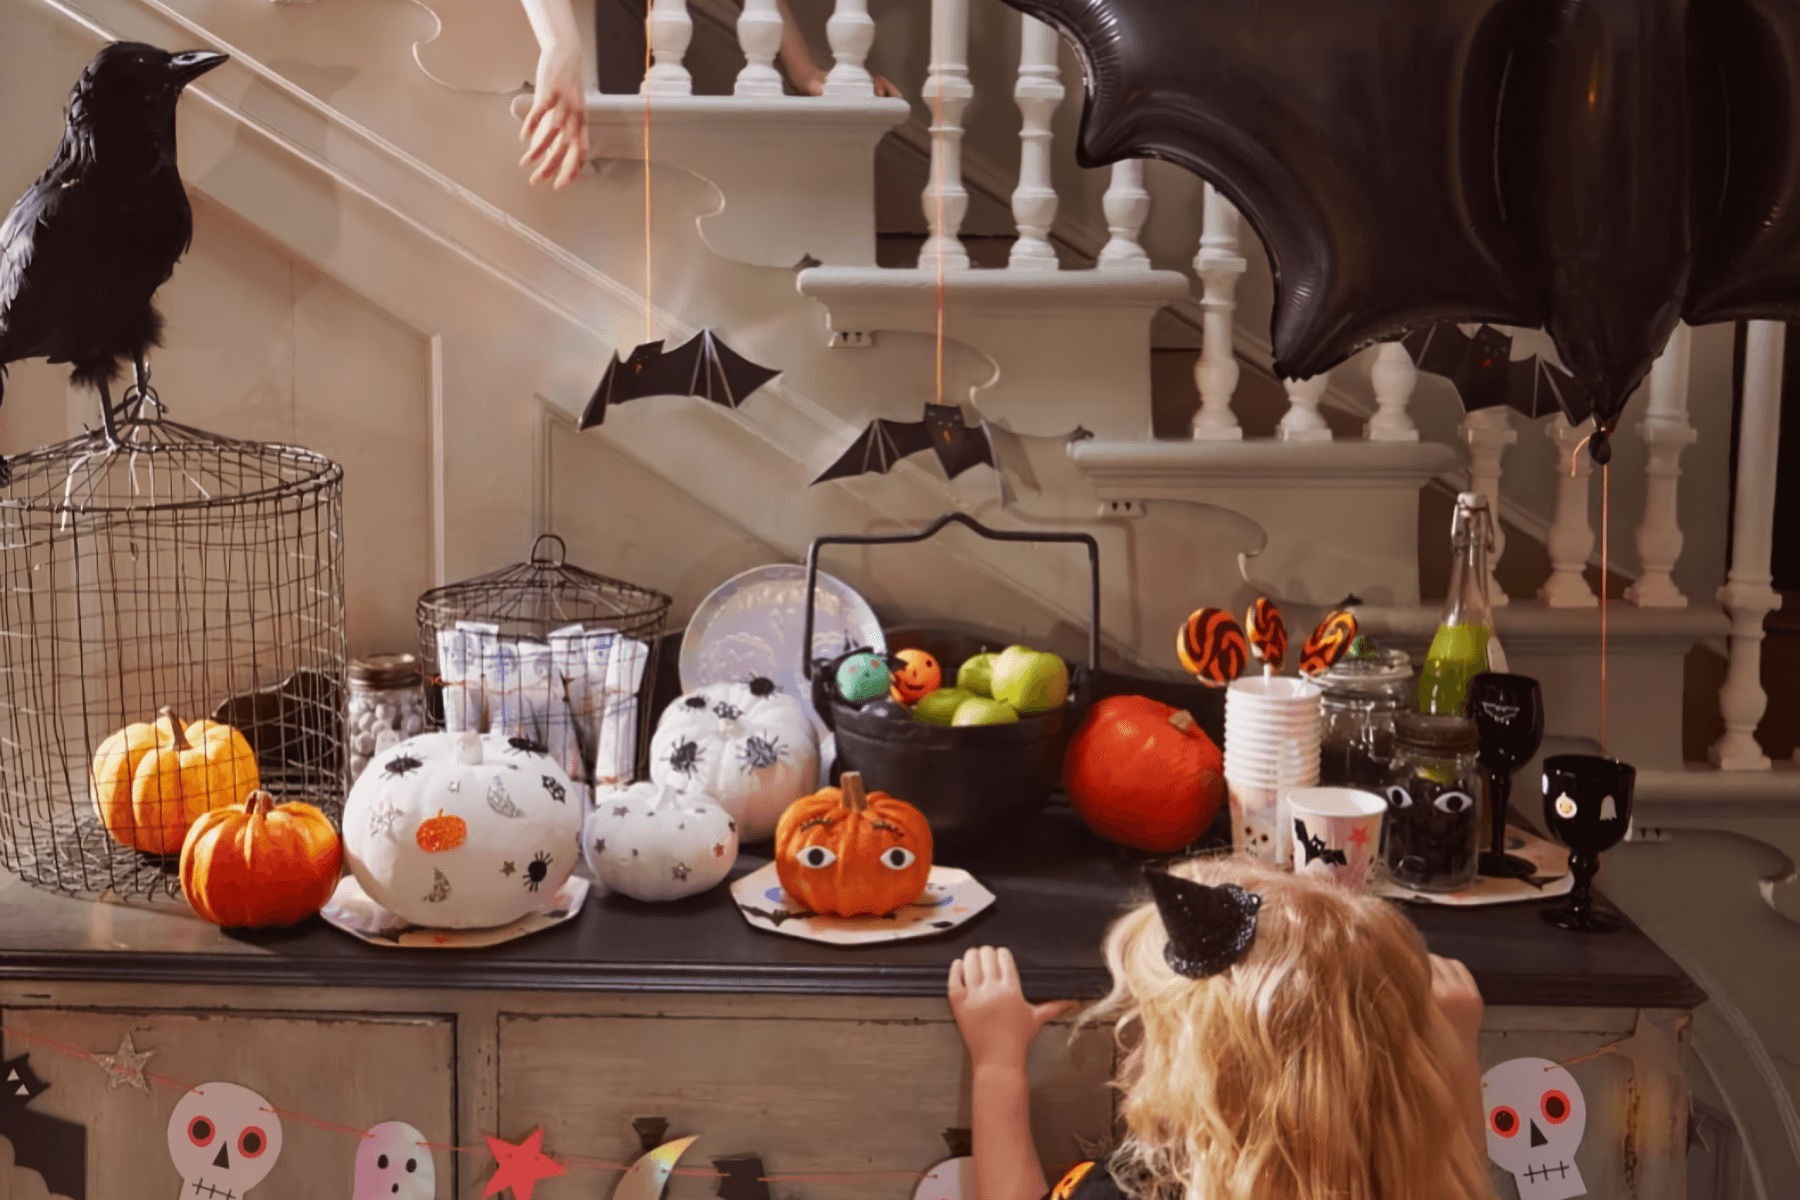 Hello Vampire Kitty returns to meet guests during Halloween season